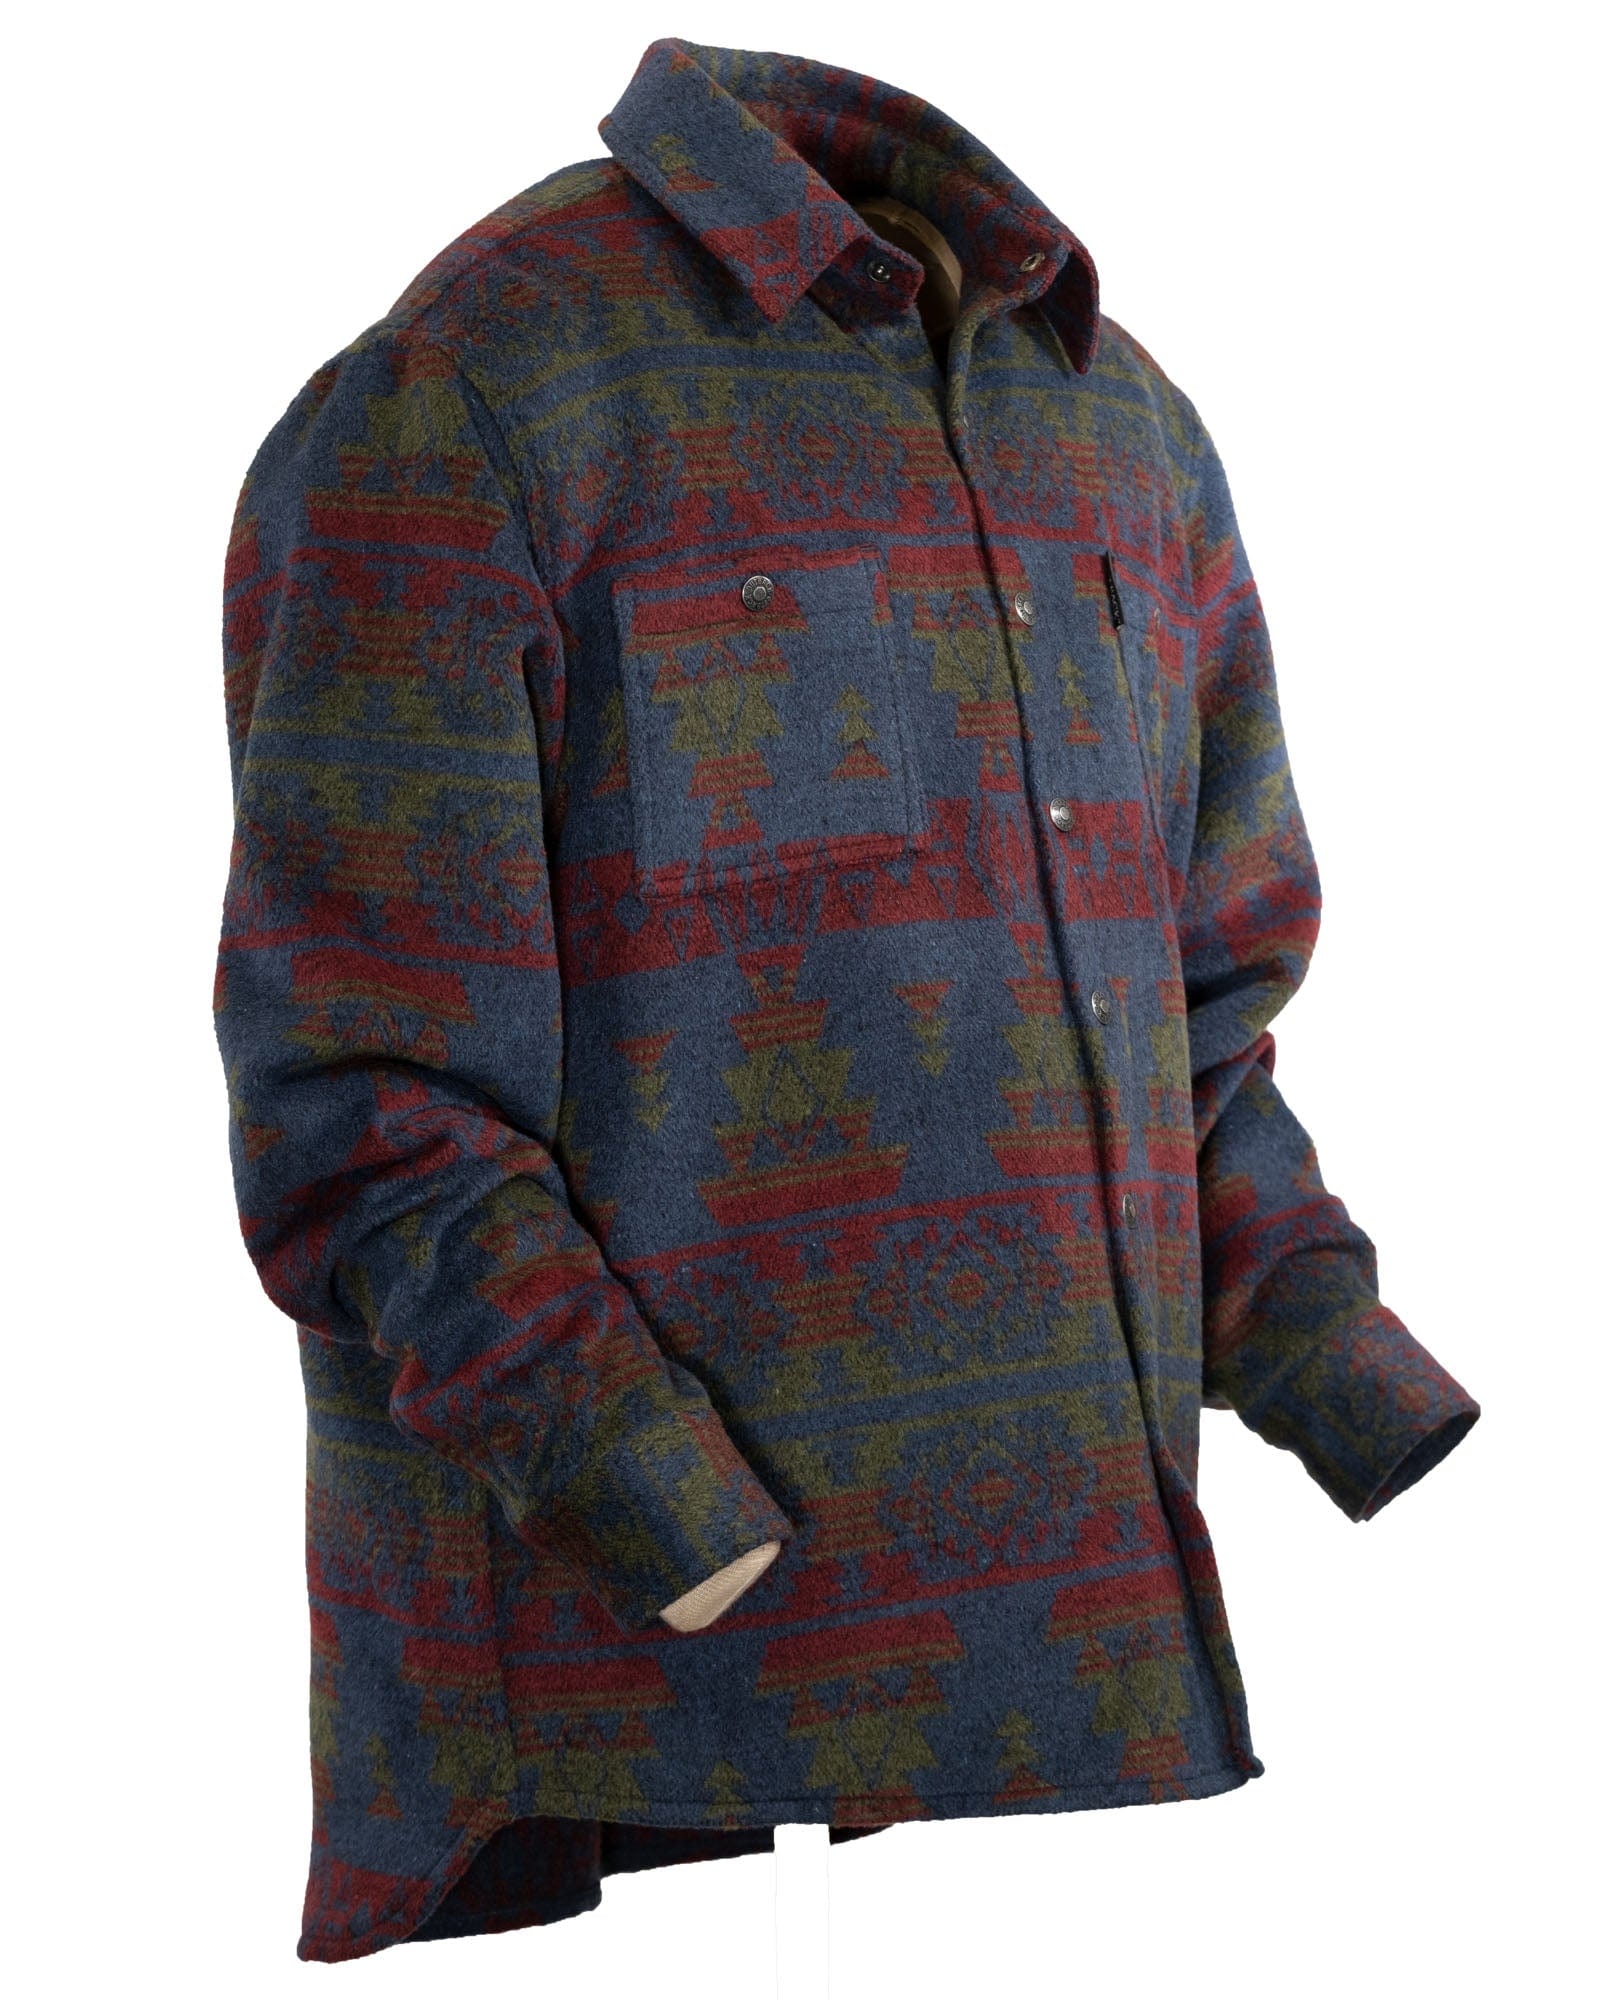 Men's Hudson Shirt Jacket | Shirt Jac by Outback Trading Company